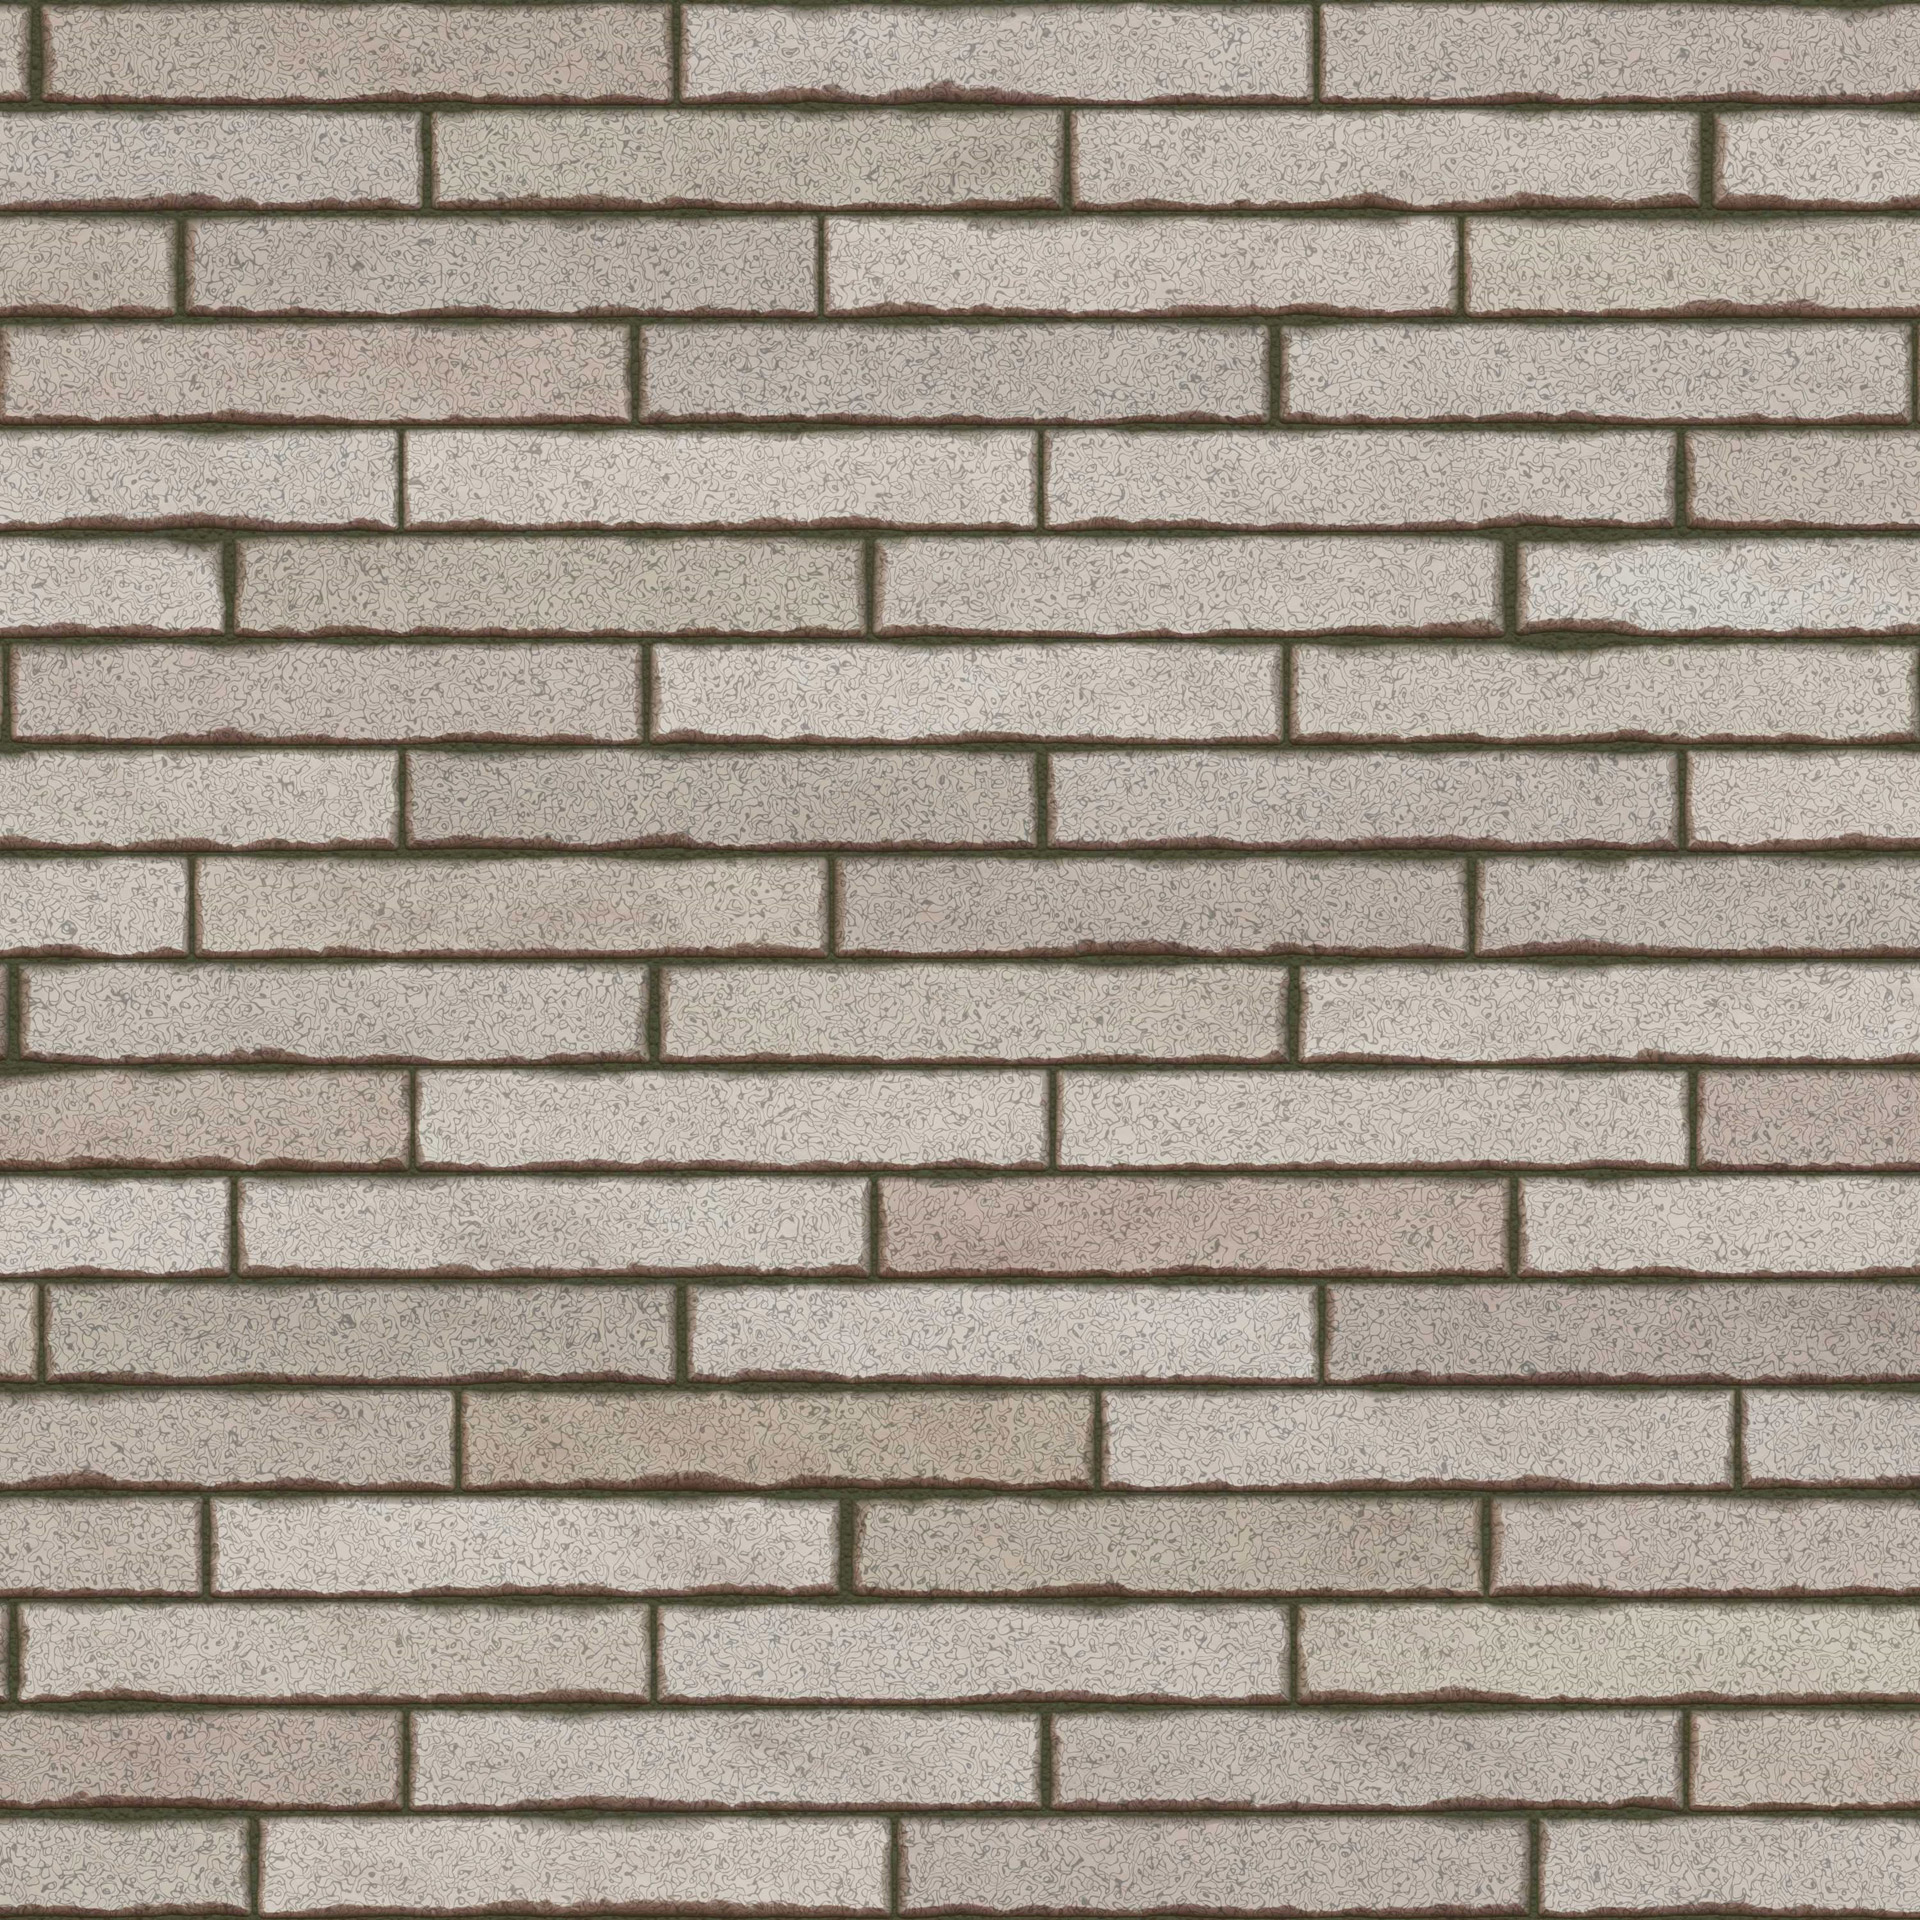 Background - Brick